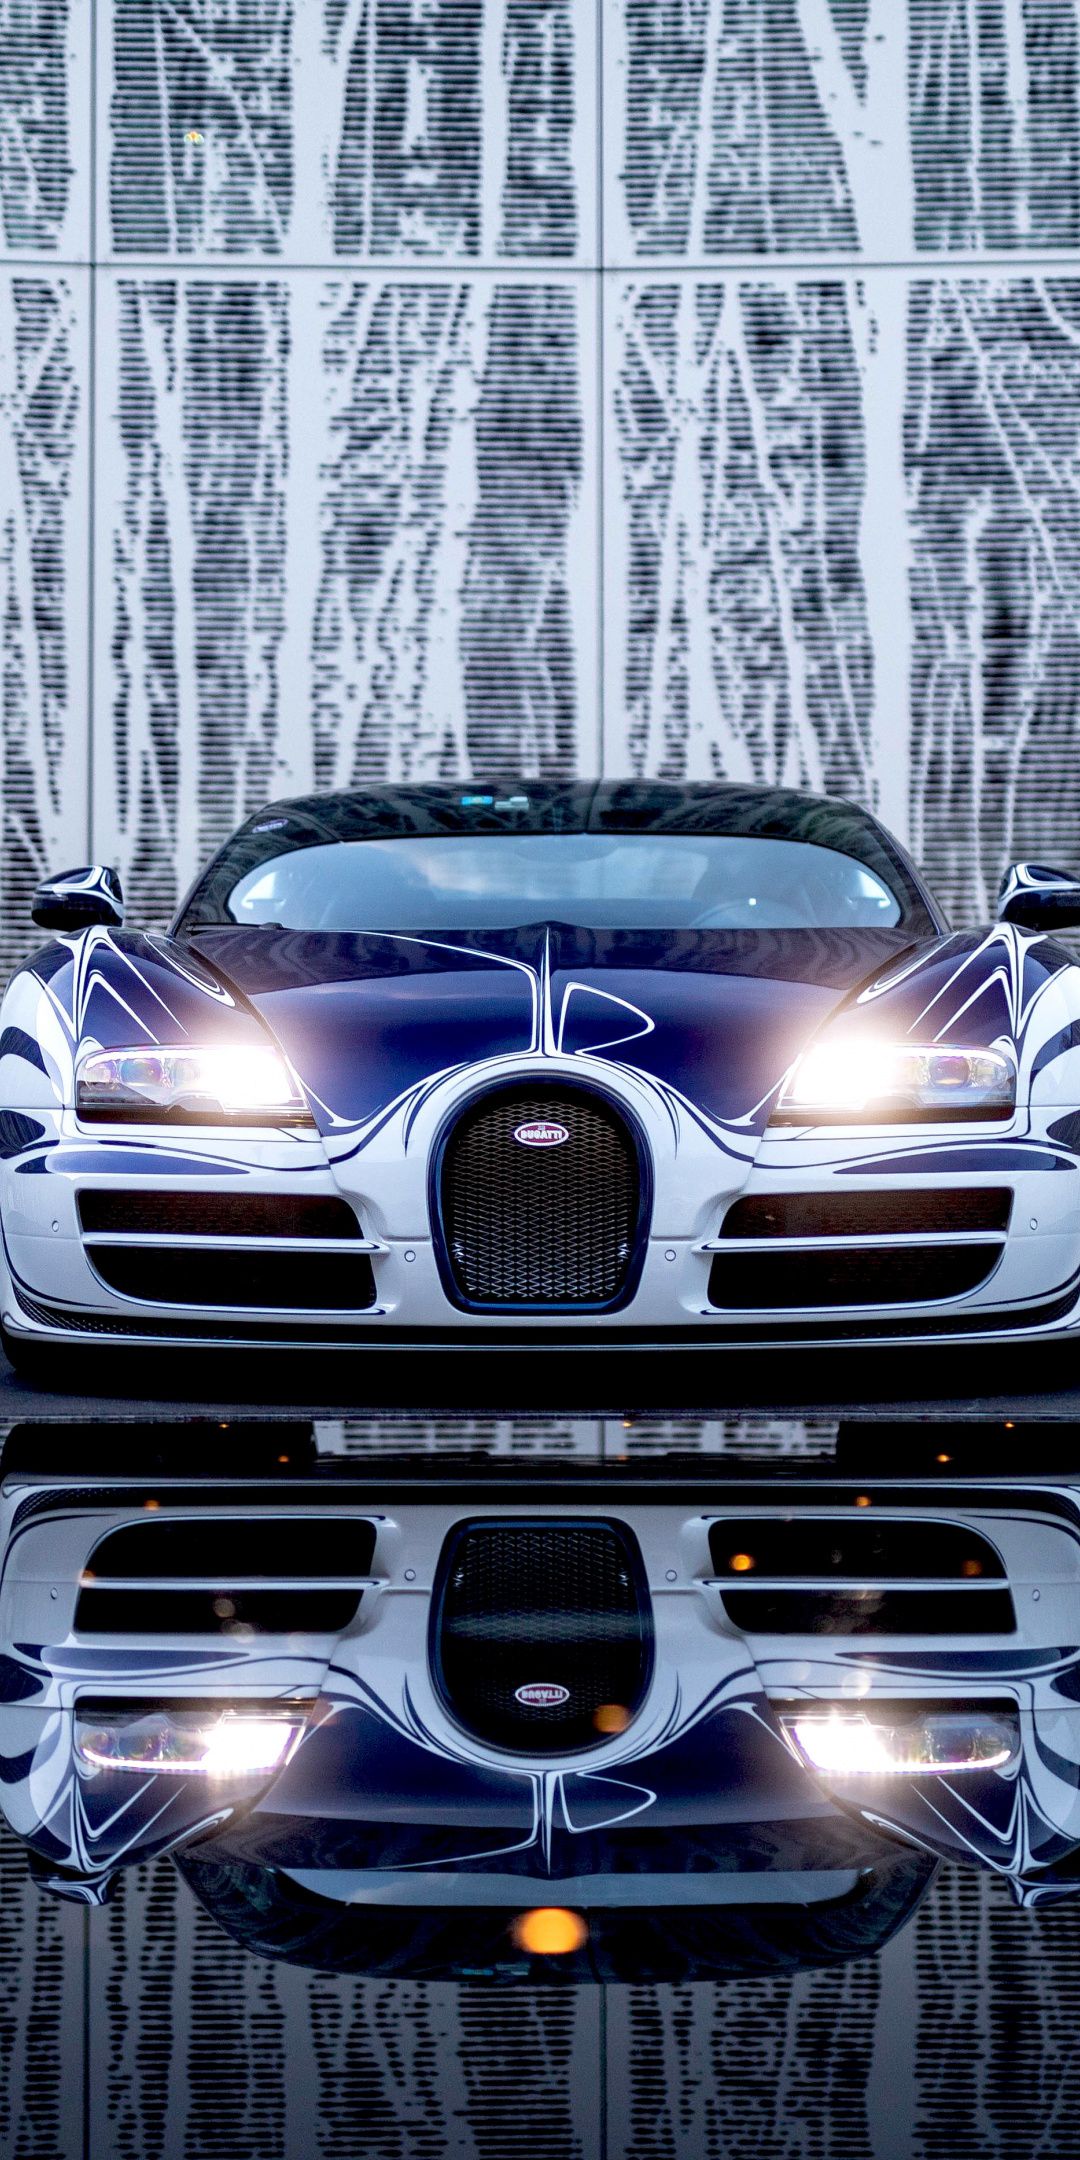 Bugatti Veyron 16-4 Grand Sport Wallpapers